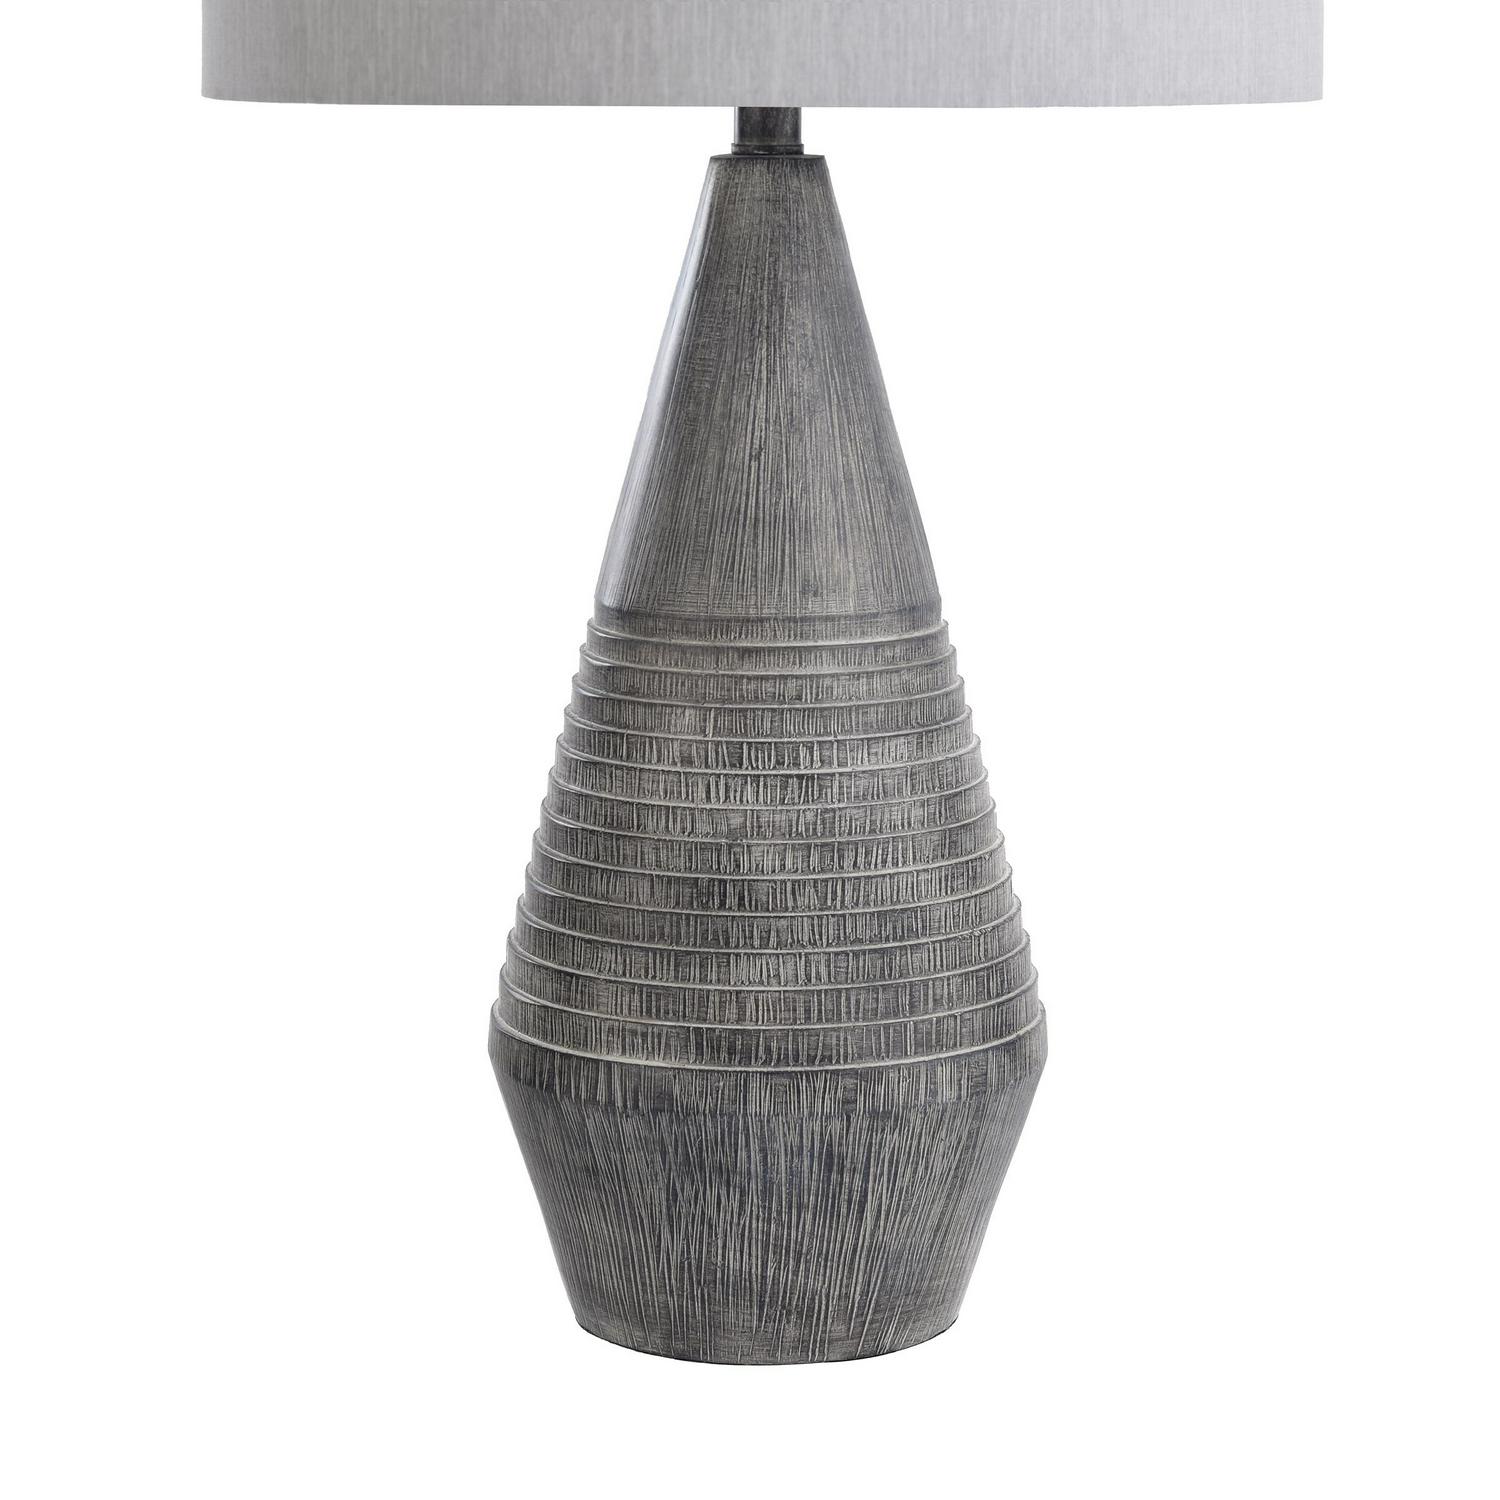 Tipton Farmhouse Tapered Molded Table Lamp Faux Wood Finish， Light Gray Fabric Shade